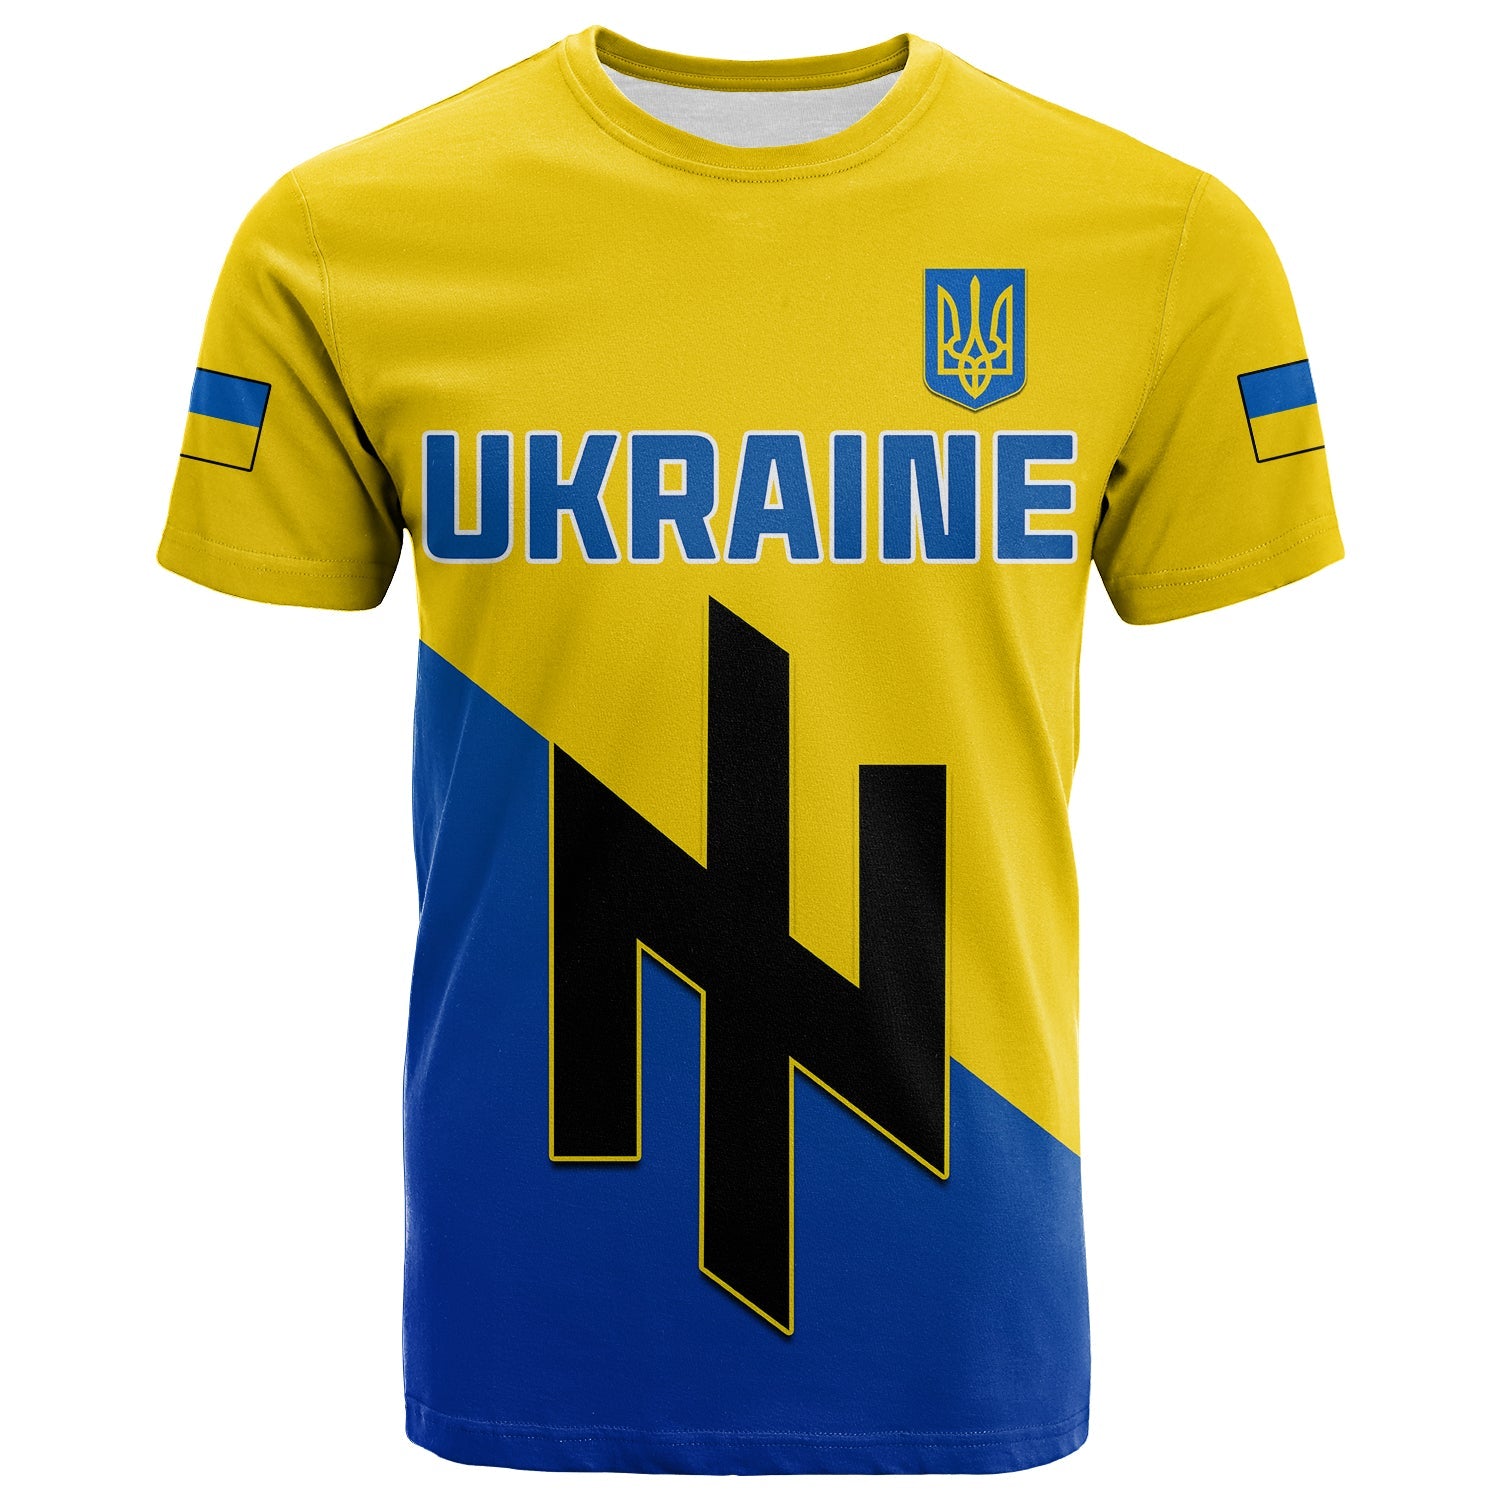 ukraine-t-shirt-style-flag-come-on